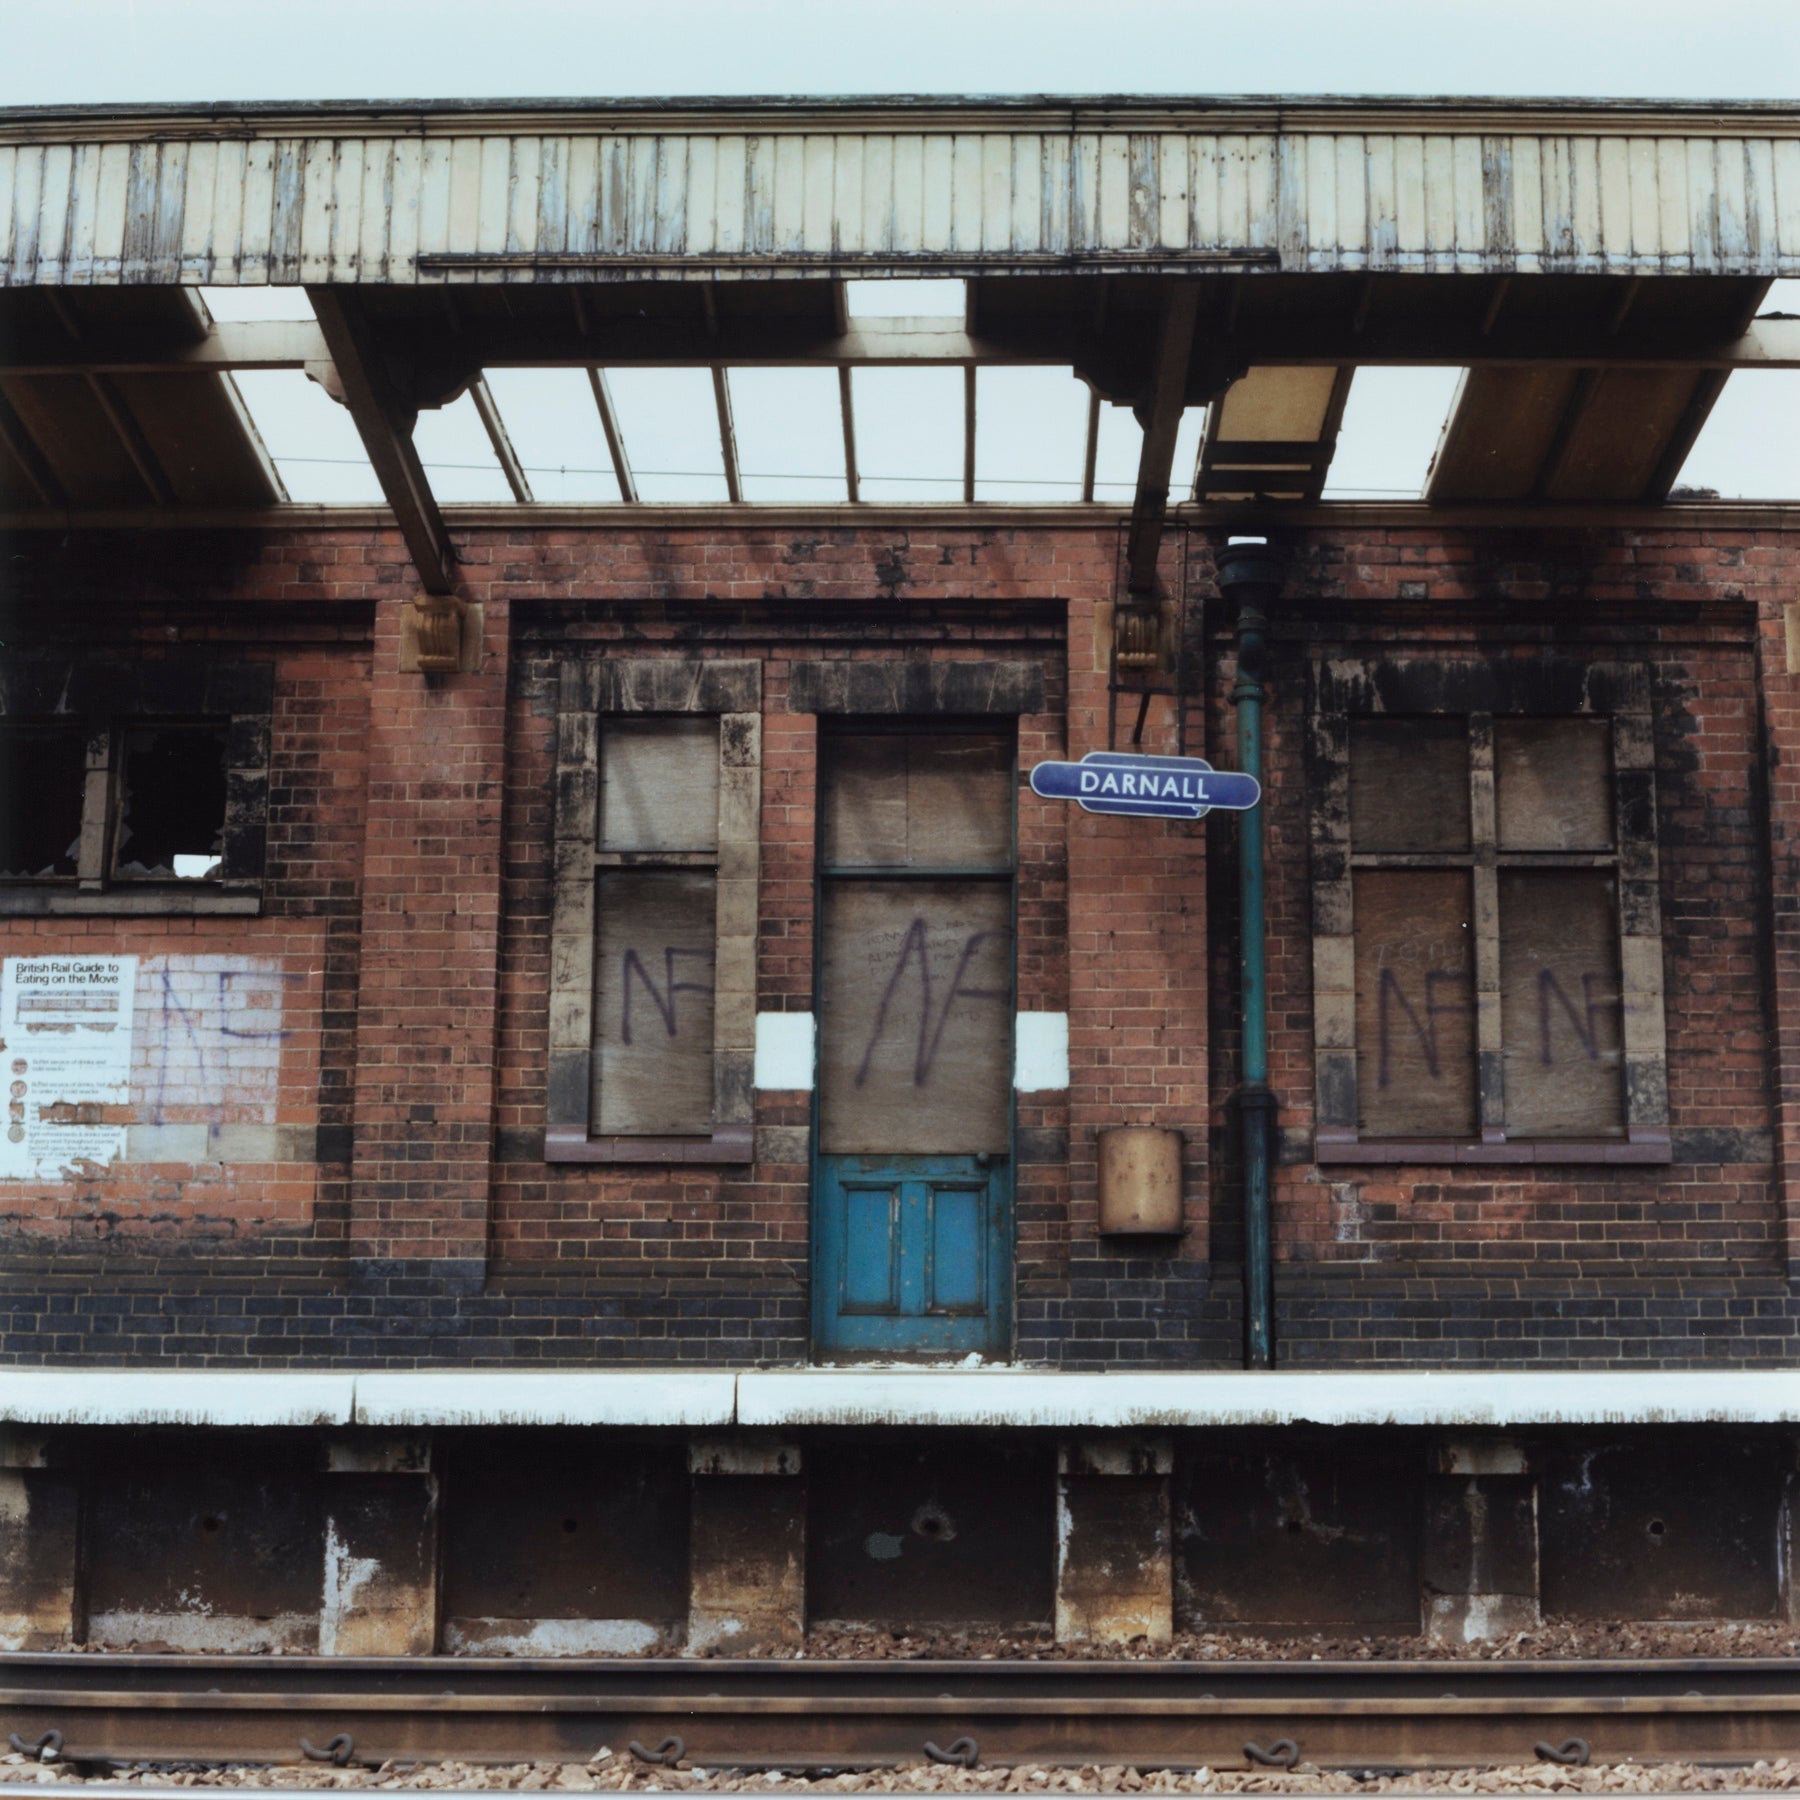 Station, Sheffield, 1978 - 7x9" Print